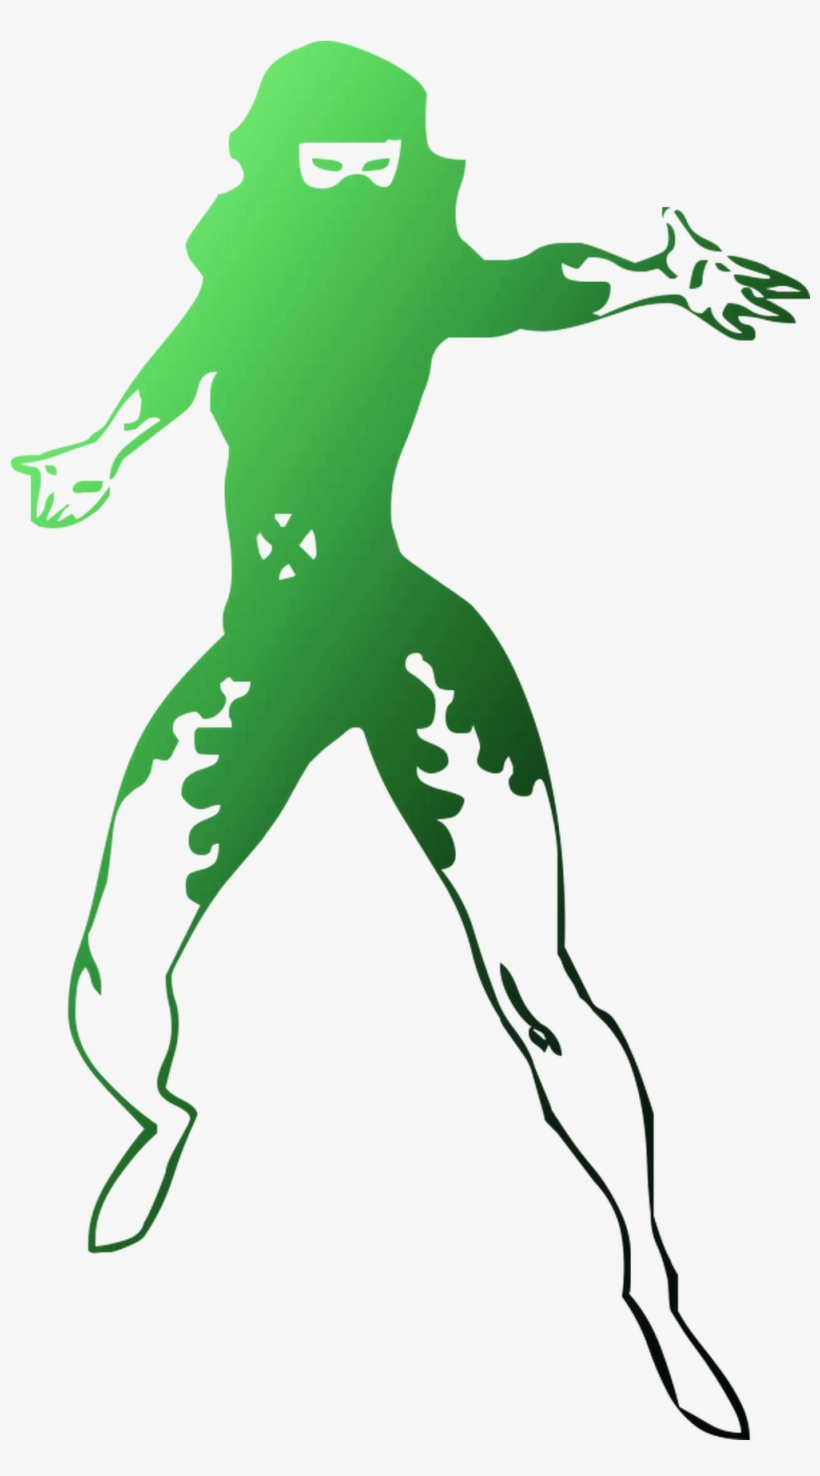 Sports Silhouette Illustration Amphibians Cartoon Download - Illustration, transparent png #9025785